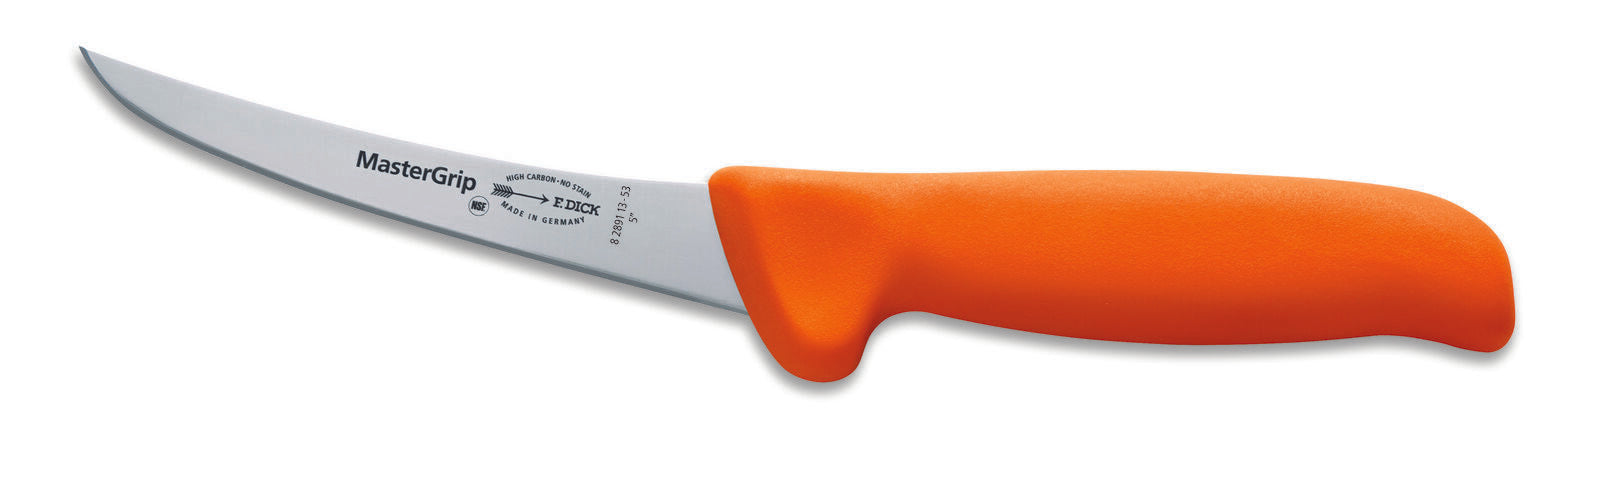 F. Dick (8289113-53) 5" Mastergrip Boning Knife, Curved, Stiff, Orange Handle-cityfoodequipment.com